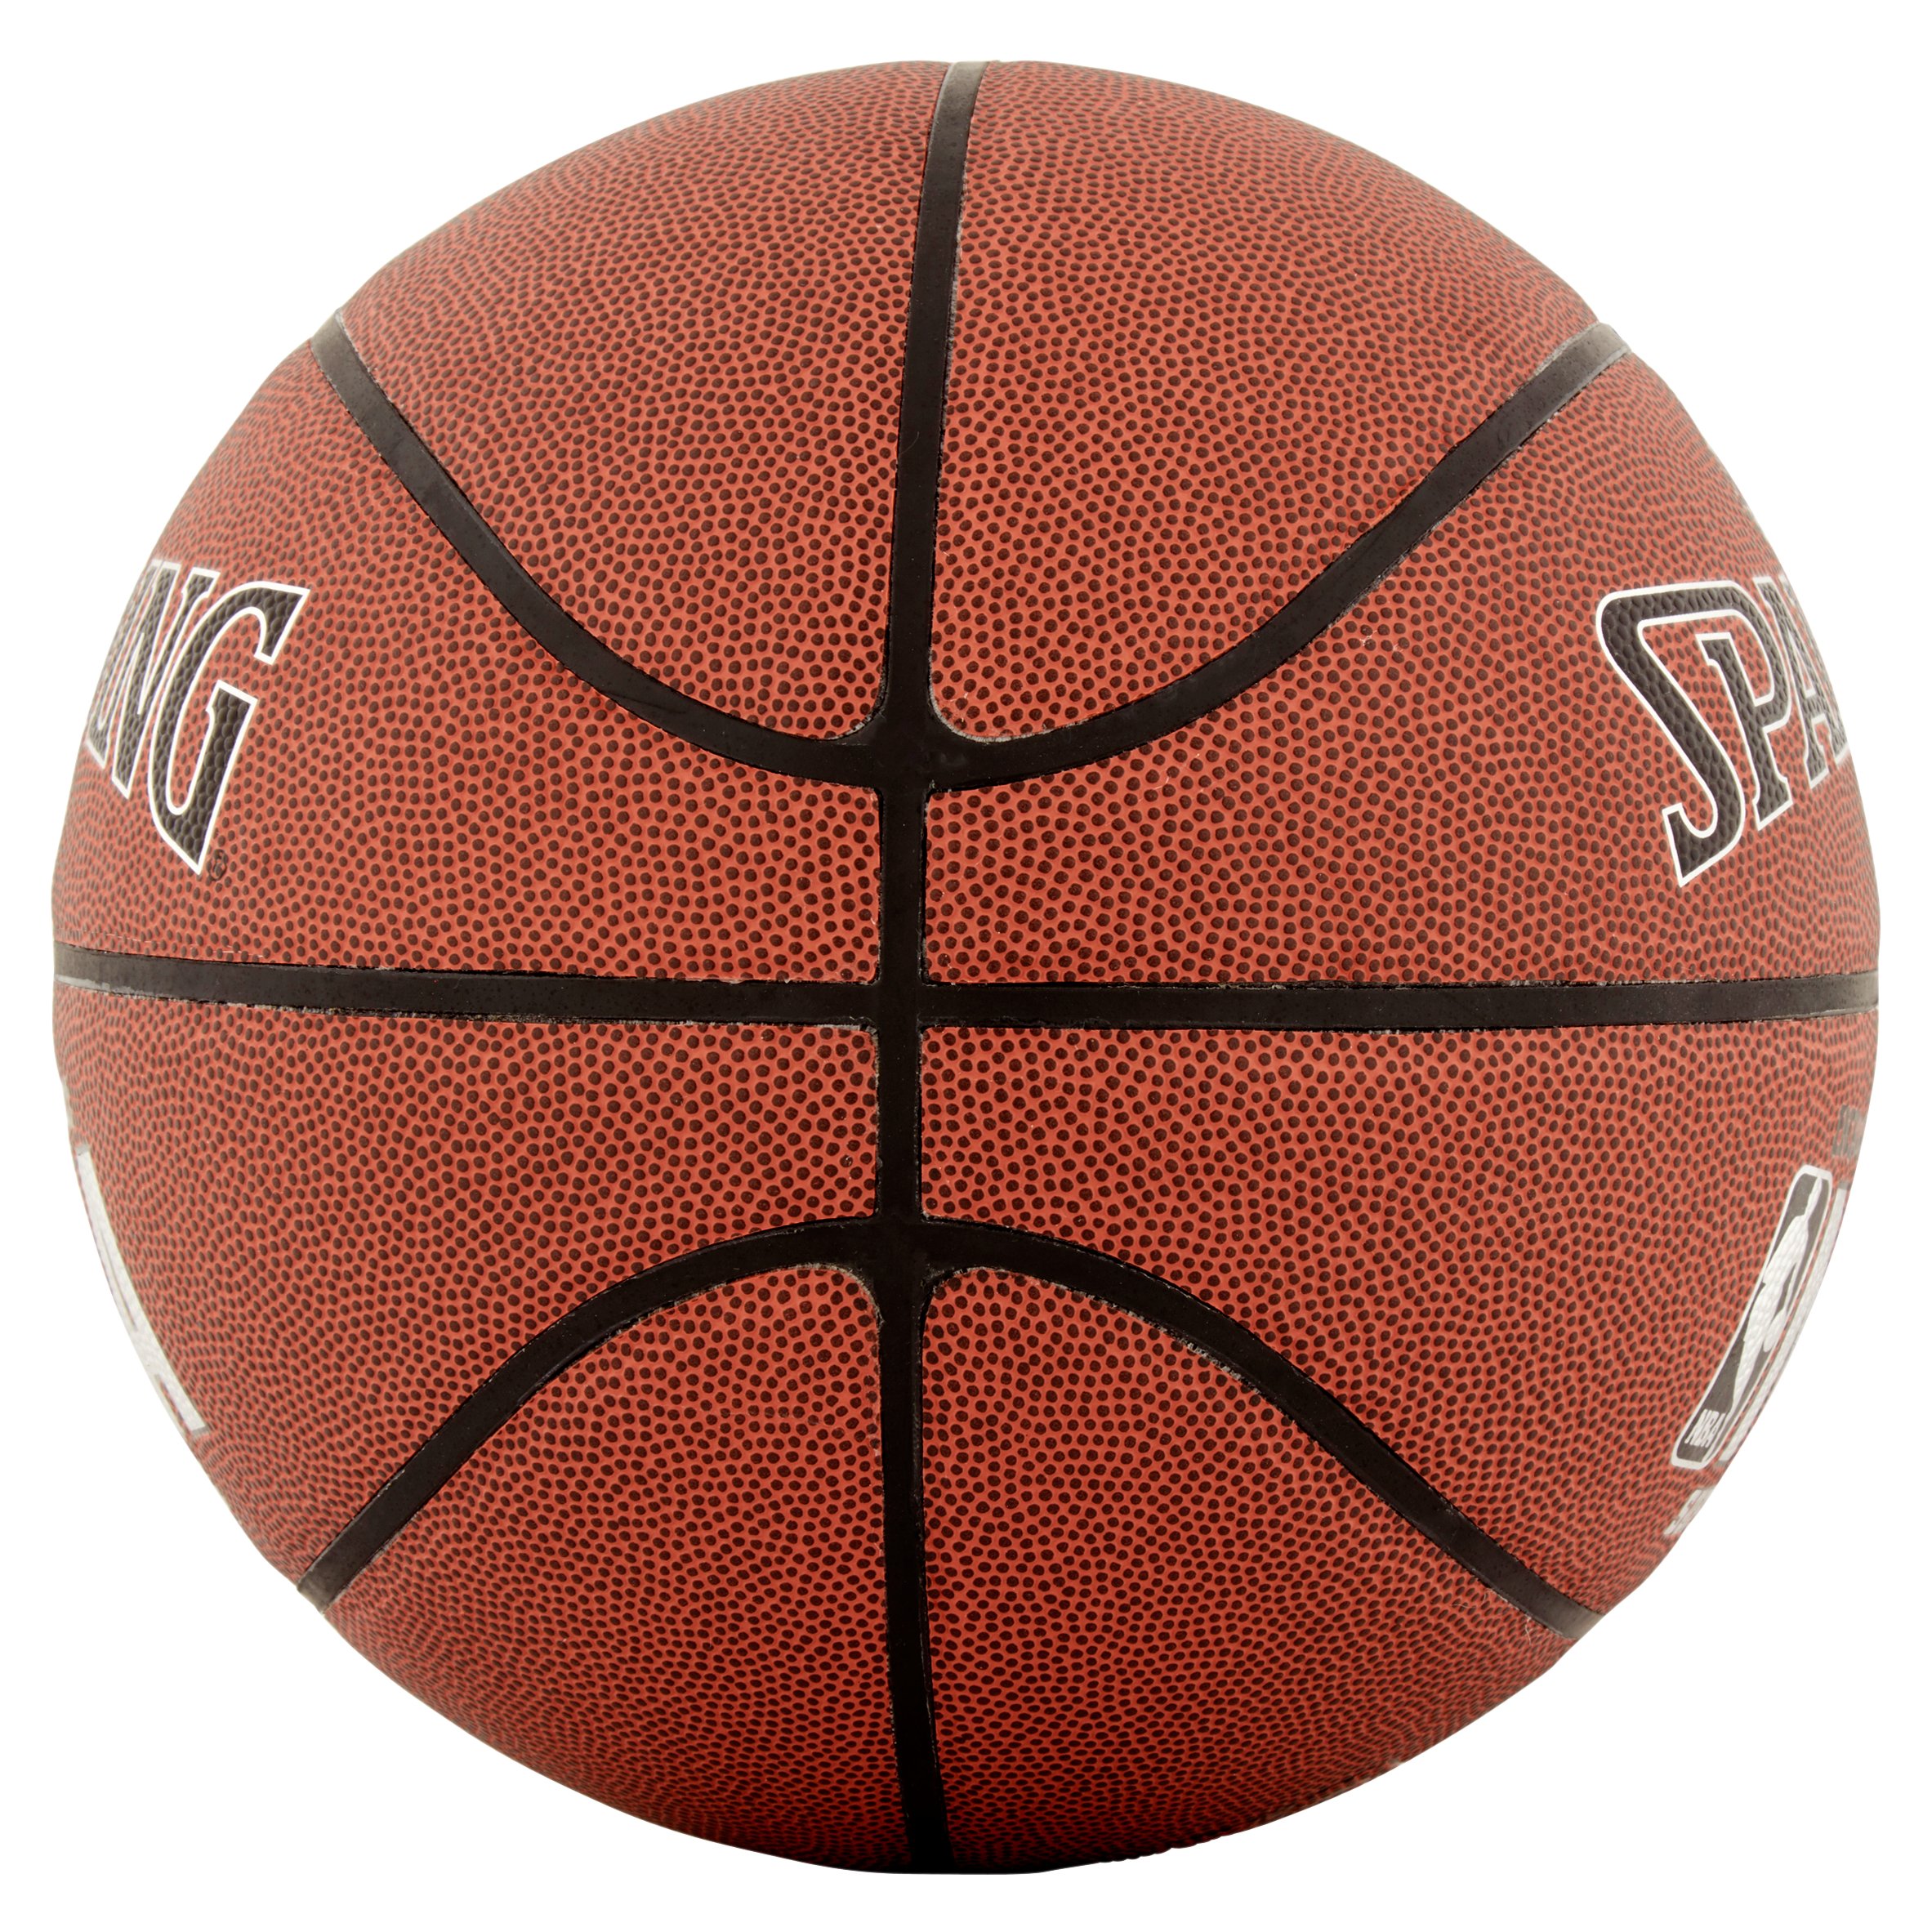 Spalding NBA Super Tack 29.5 Indoor/Outdoor Basketball - image 6 of 7